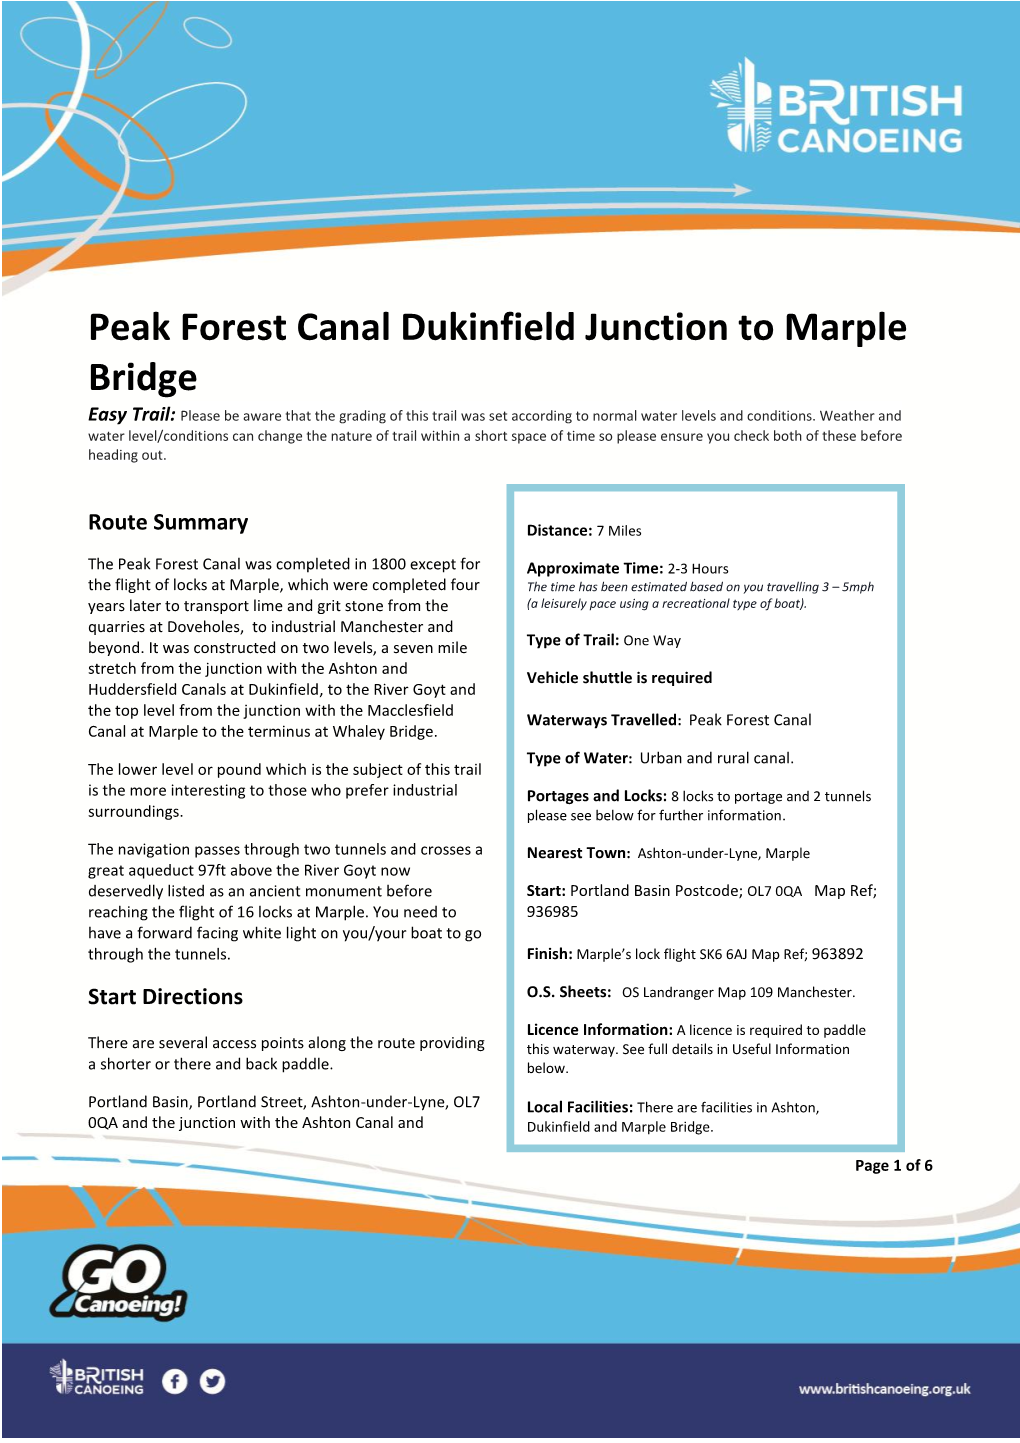 Peak Forest Canal Dukinfield Junction to Marple Bridge